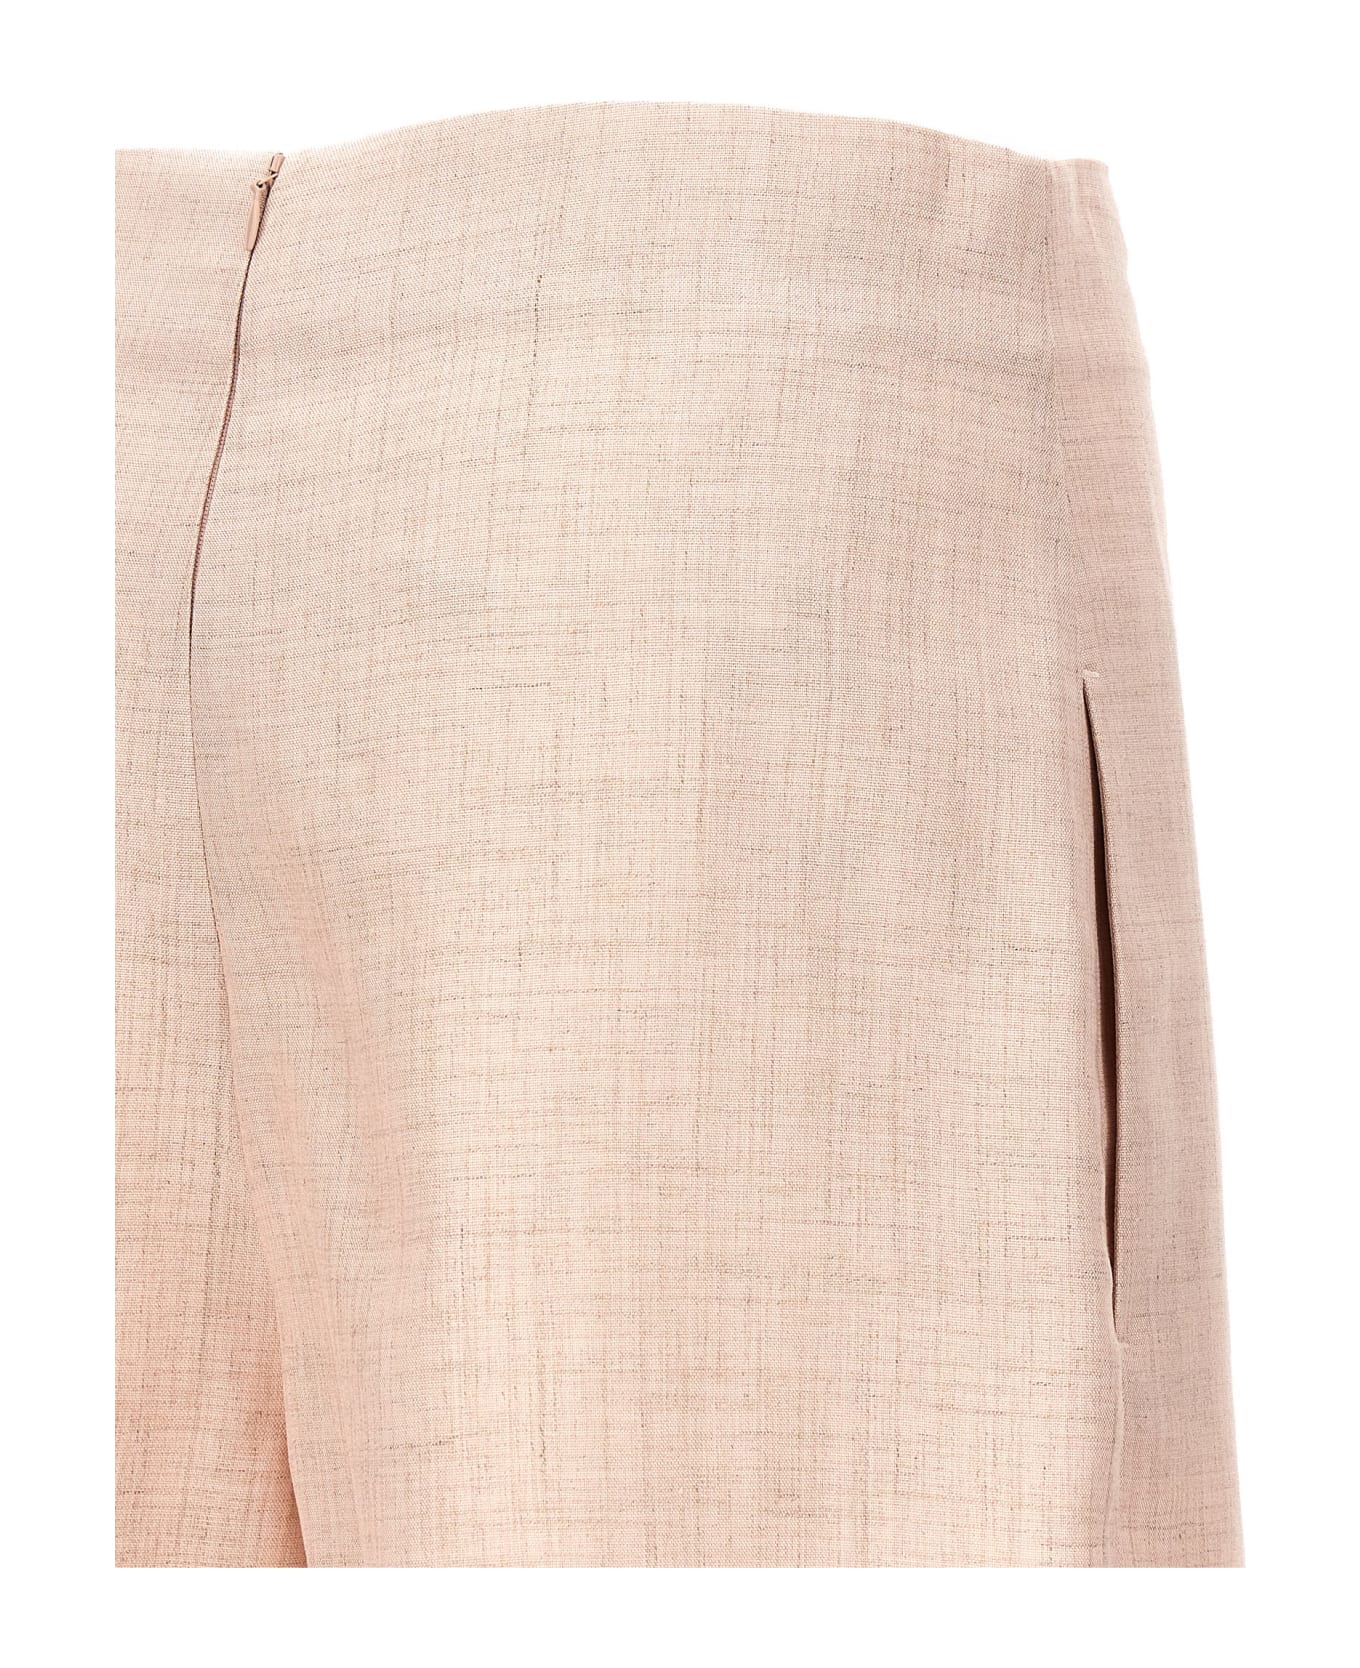 Philosophy di Lorenzo Serafini Linen Blend Shorts - Pink